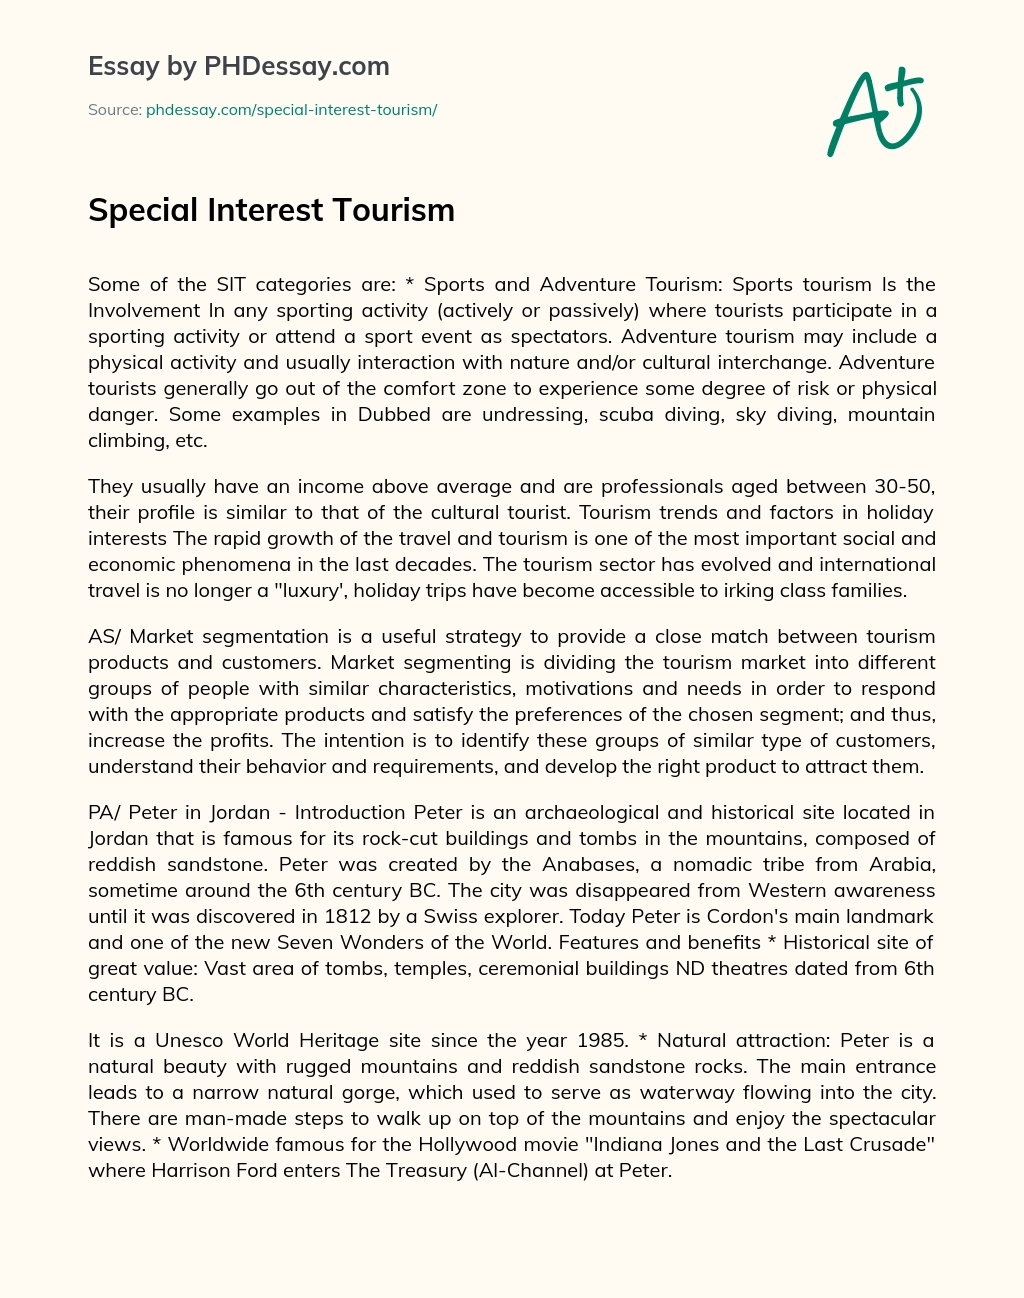 Special Interest Tourism essay